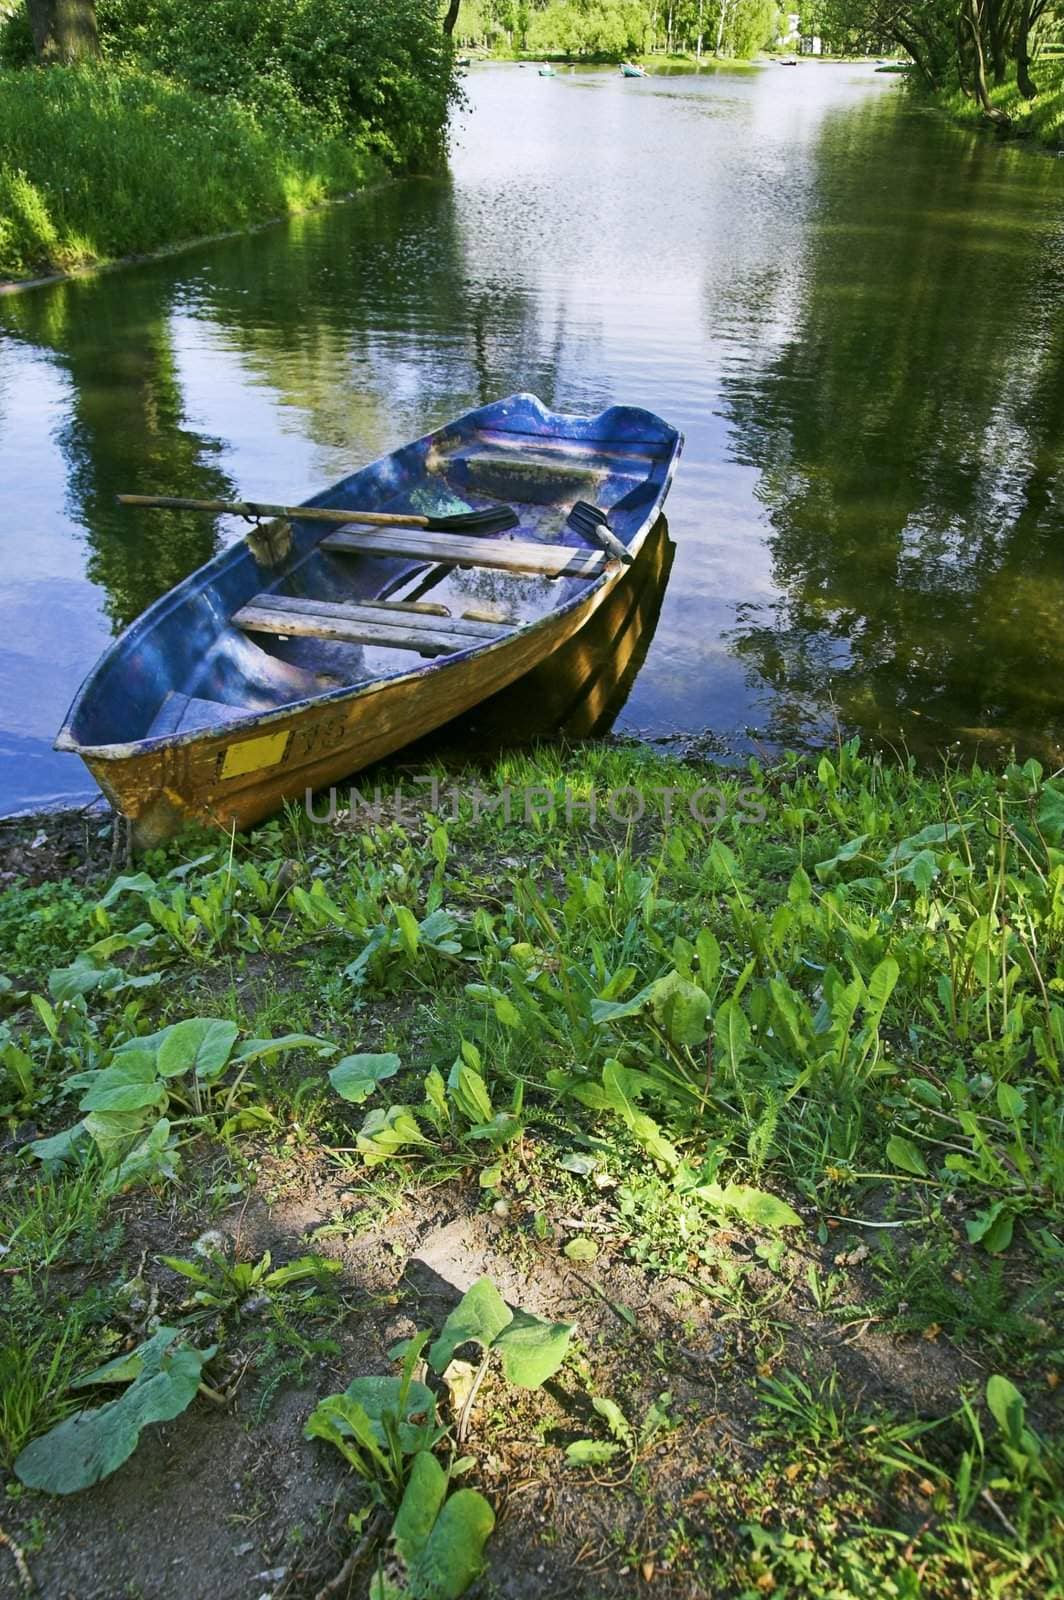 Boat at lake shore in summer park in Saint Petersburg, Russia